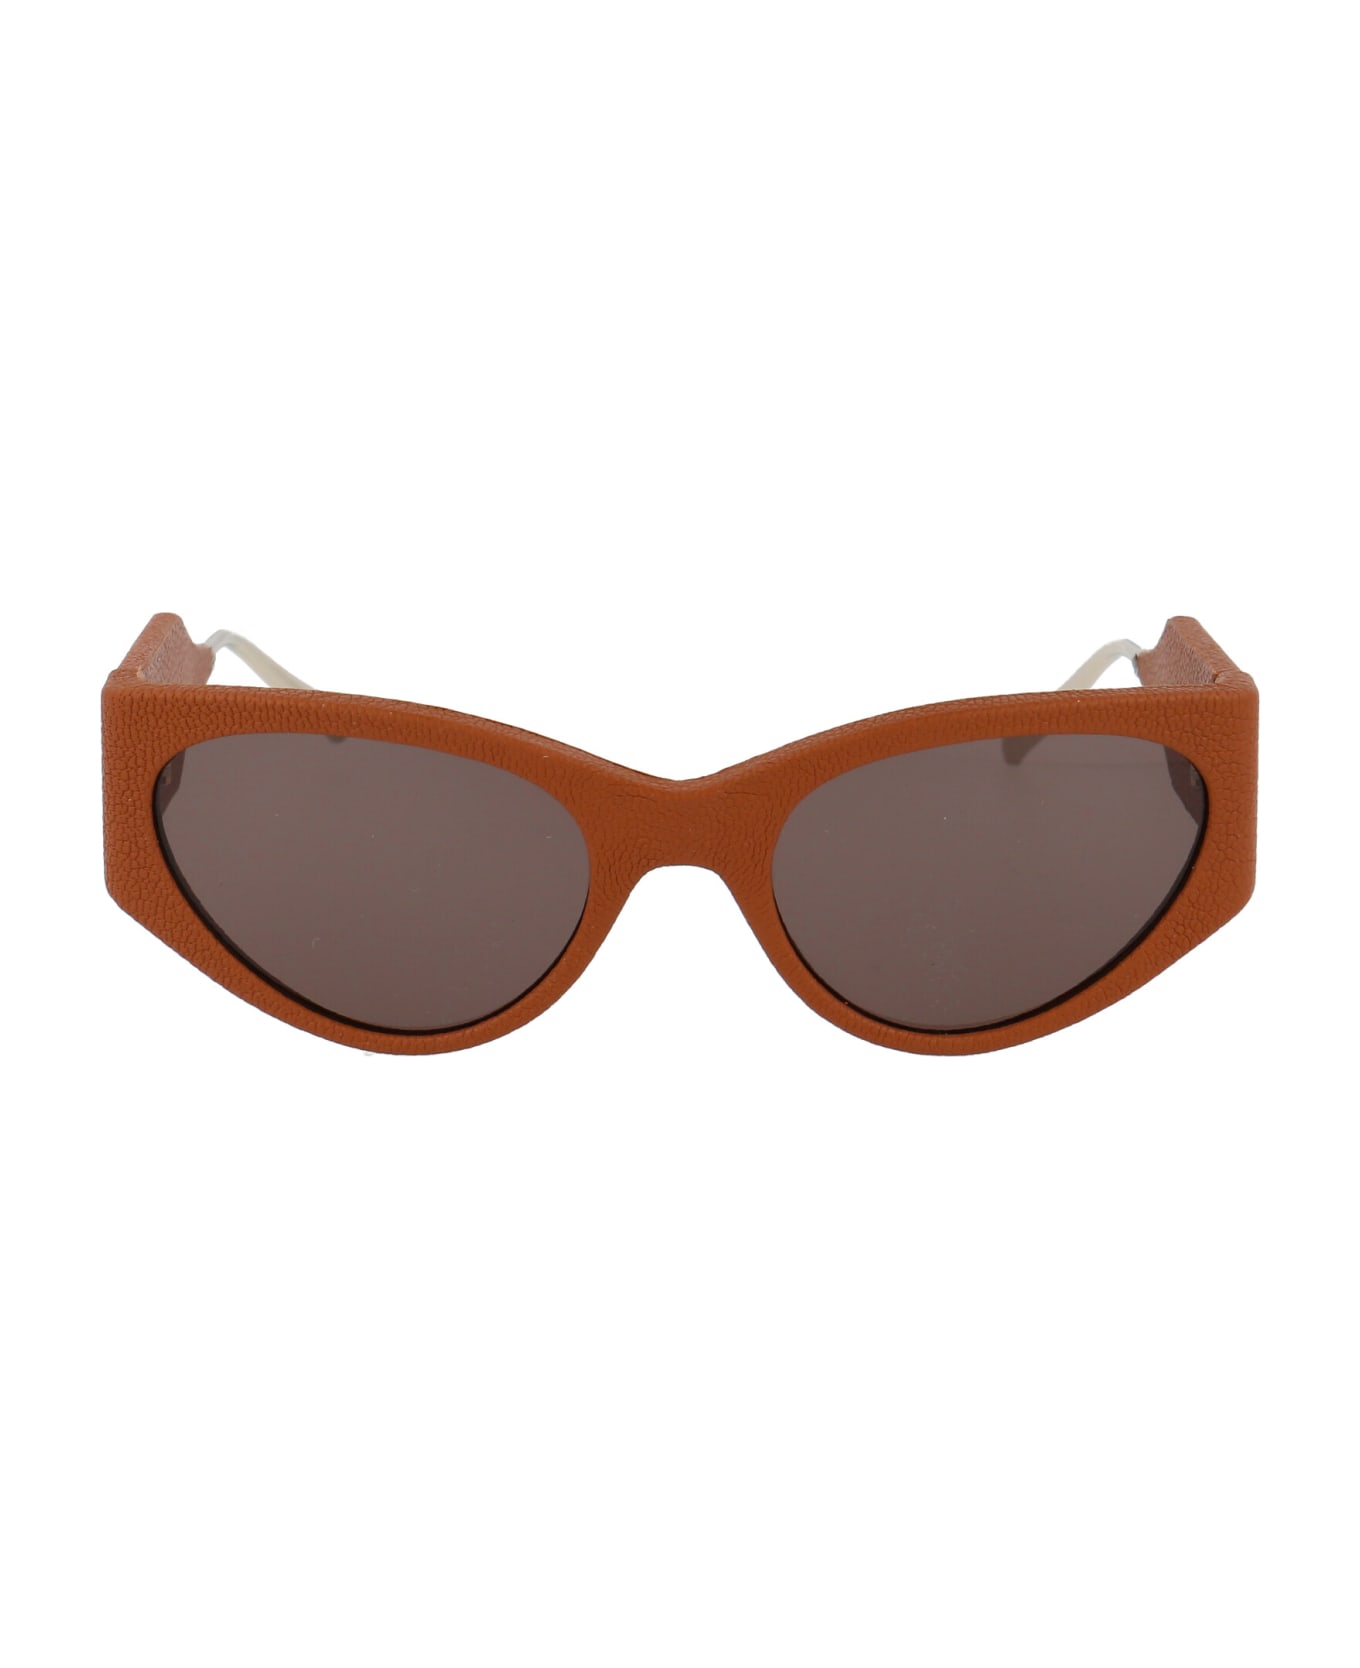 Salvatore Ferragamo Eyewear Sf950sl Sunglasses - 261 CARAMEL LEATHER